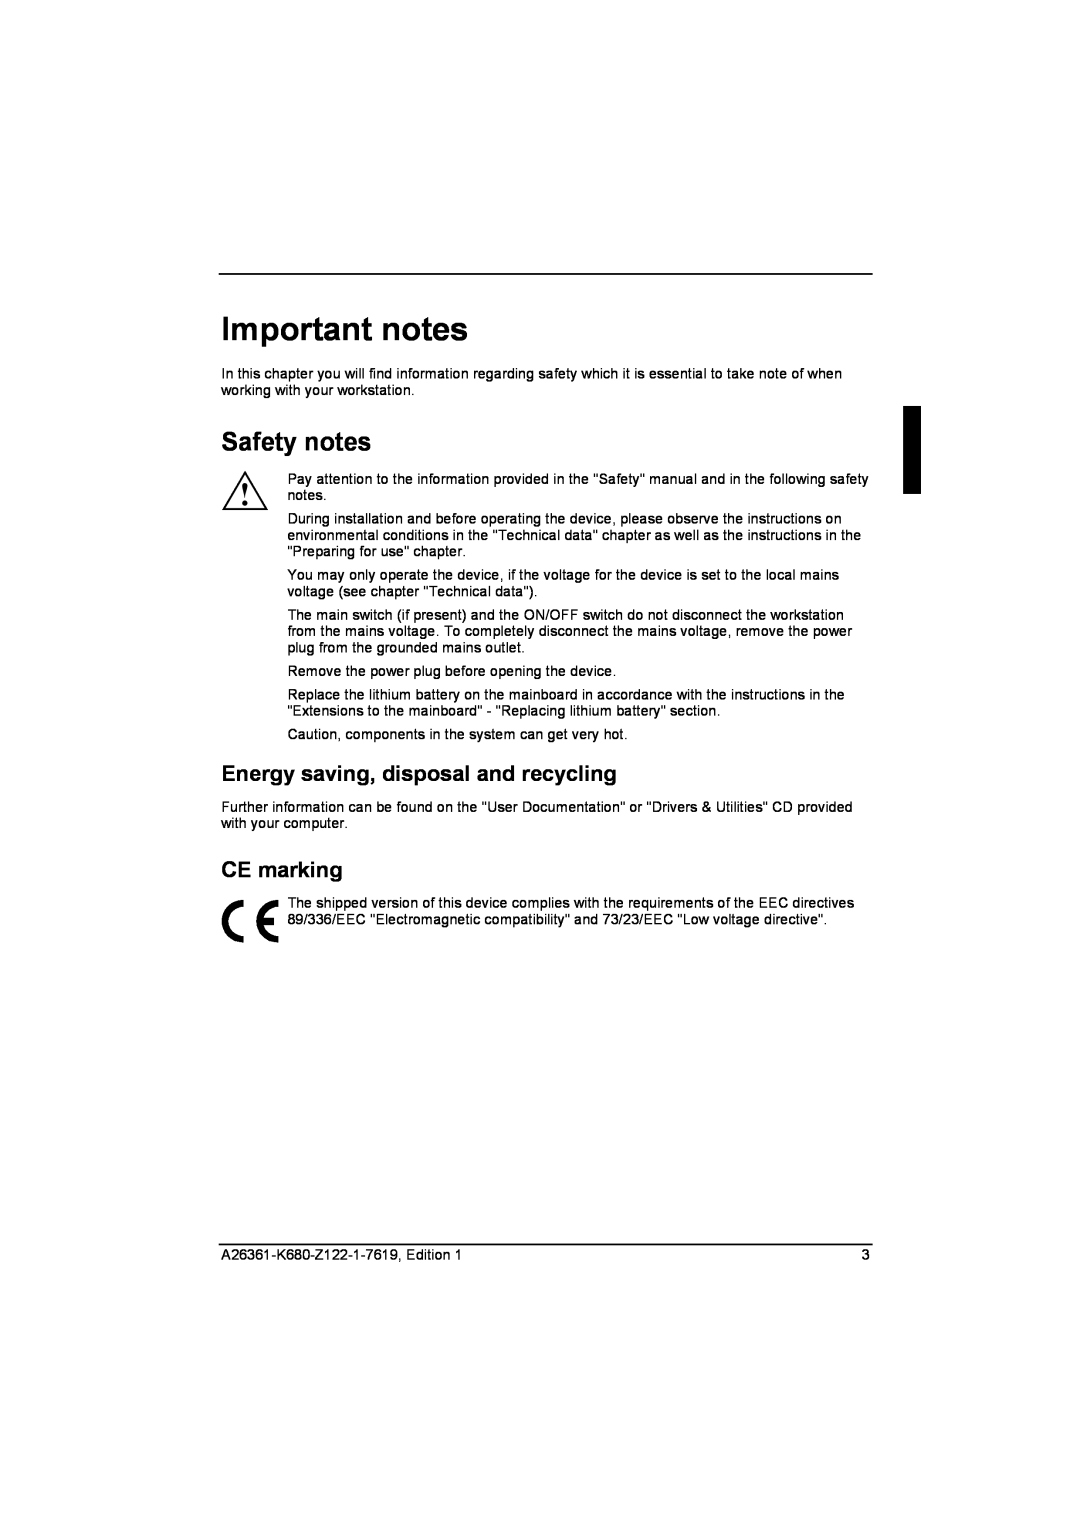 Fujitsu R630, V810 manual Important notes, Safety notes, Energy saving, disposal and recycling, CE marking 